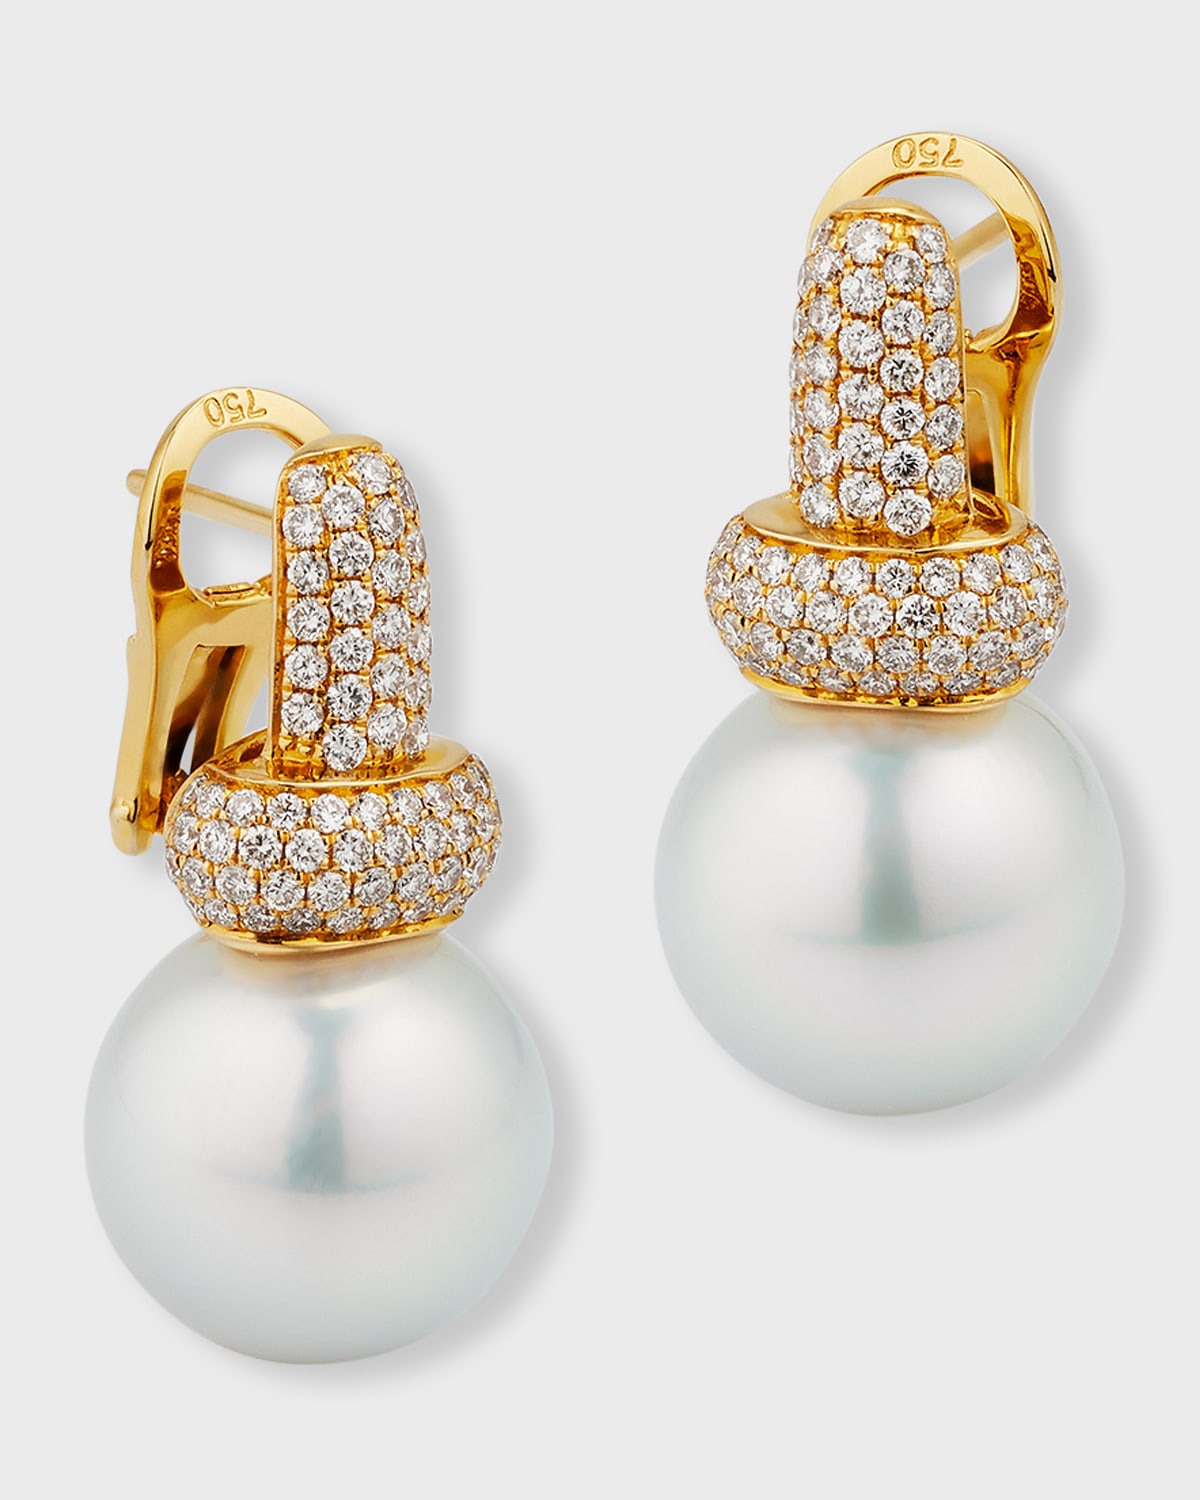 18K Yellow Gold South Sea Pearl and Diamond Earrings